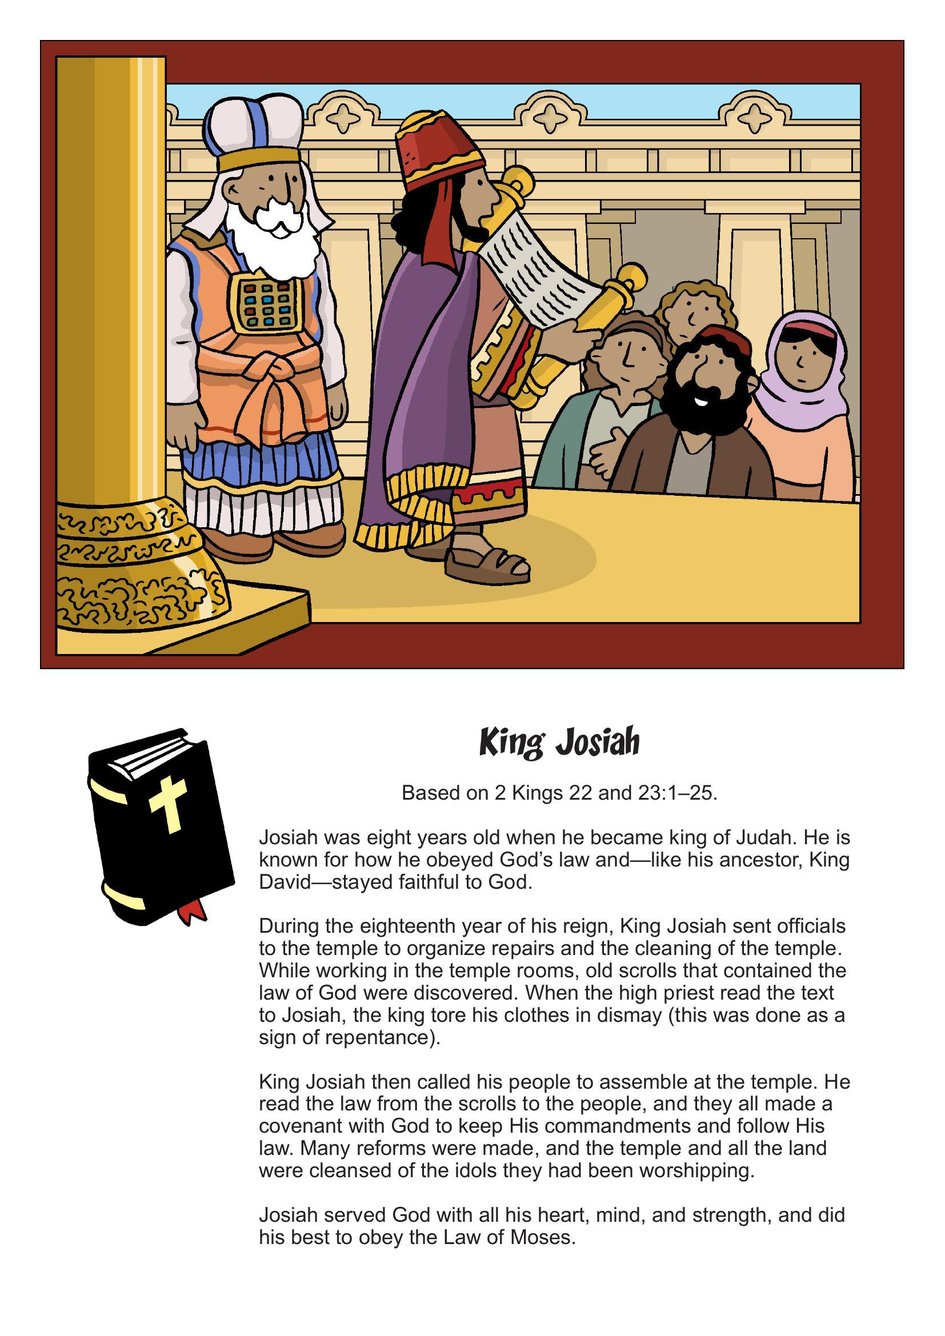 Who was King Josiah in the Bible?